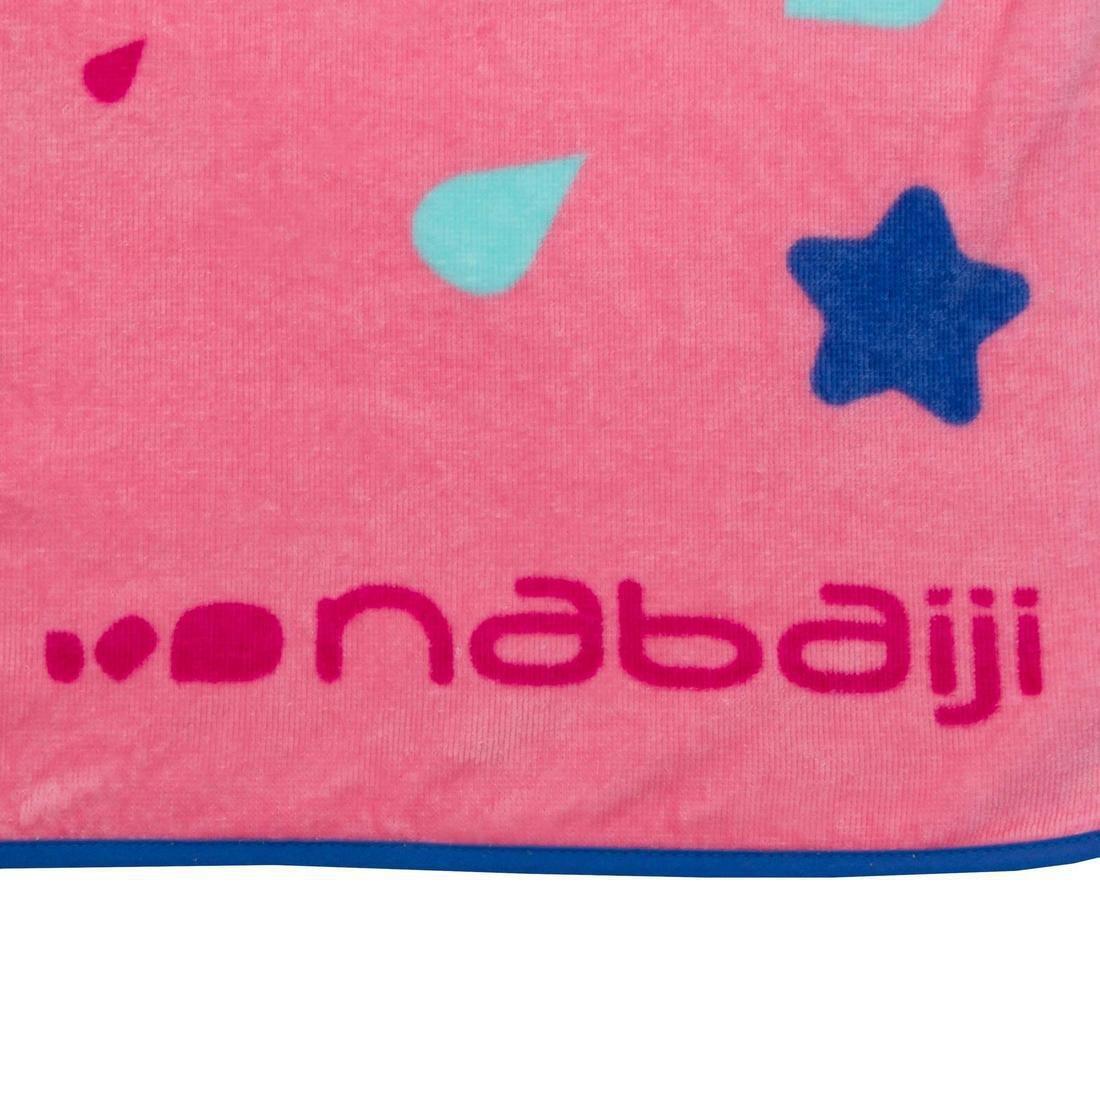 NABAIJI - Baby Pool Towel With Hood -  Unicorn Print